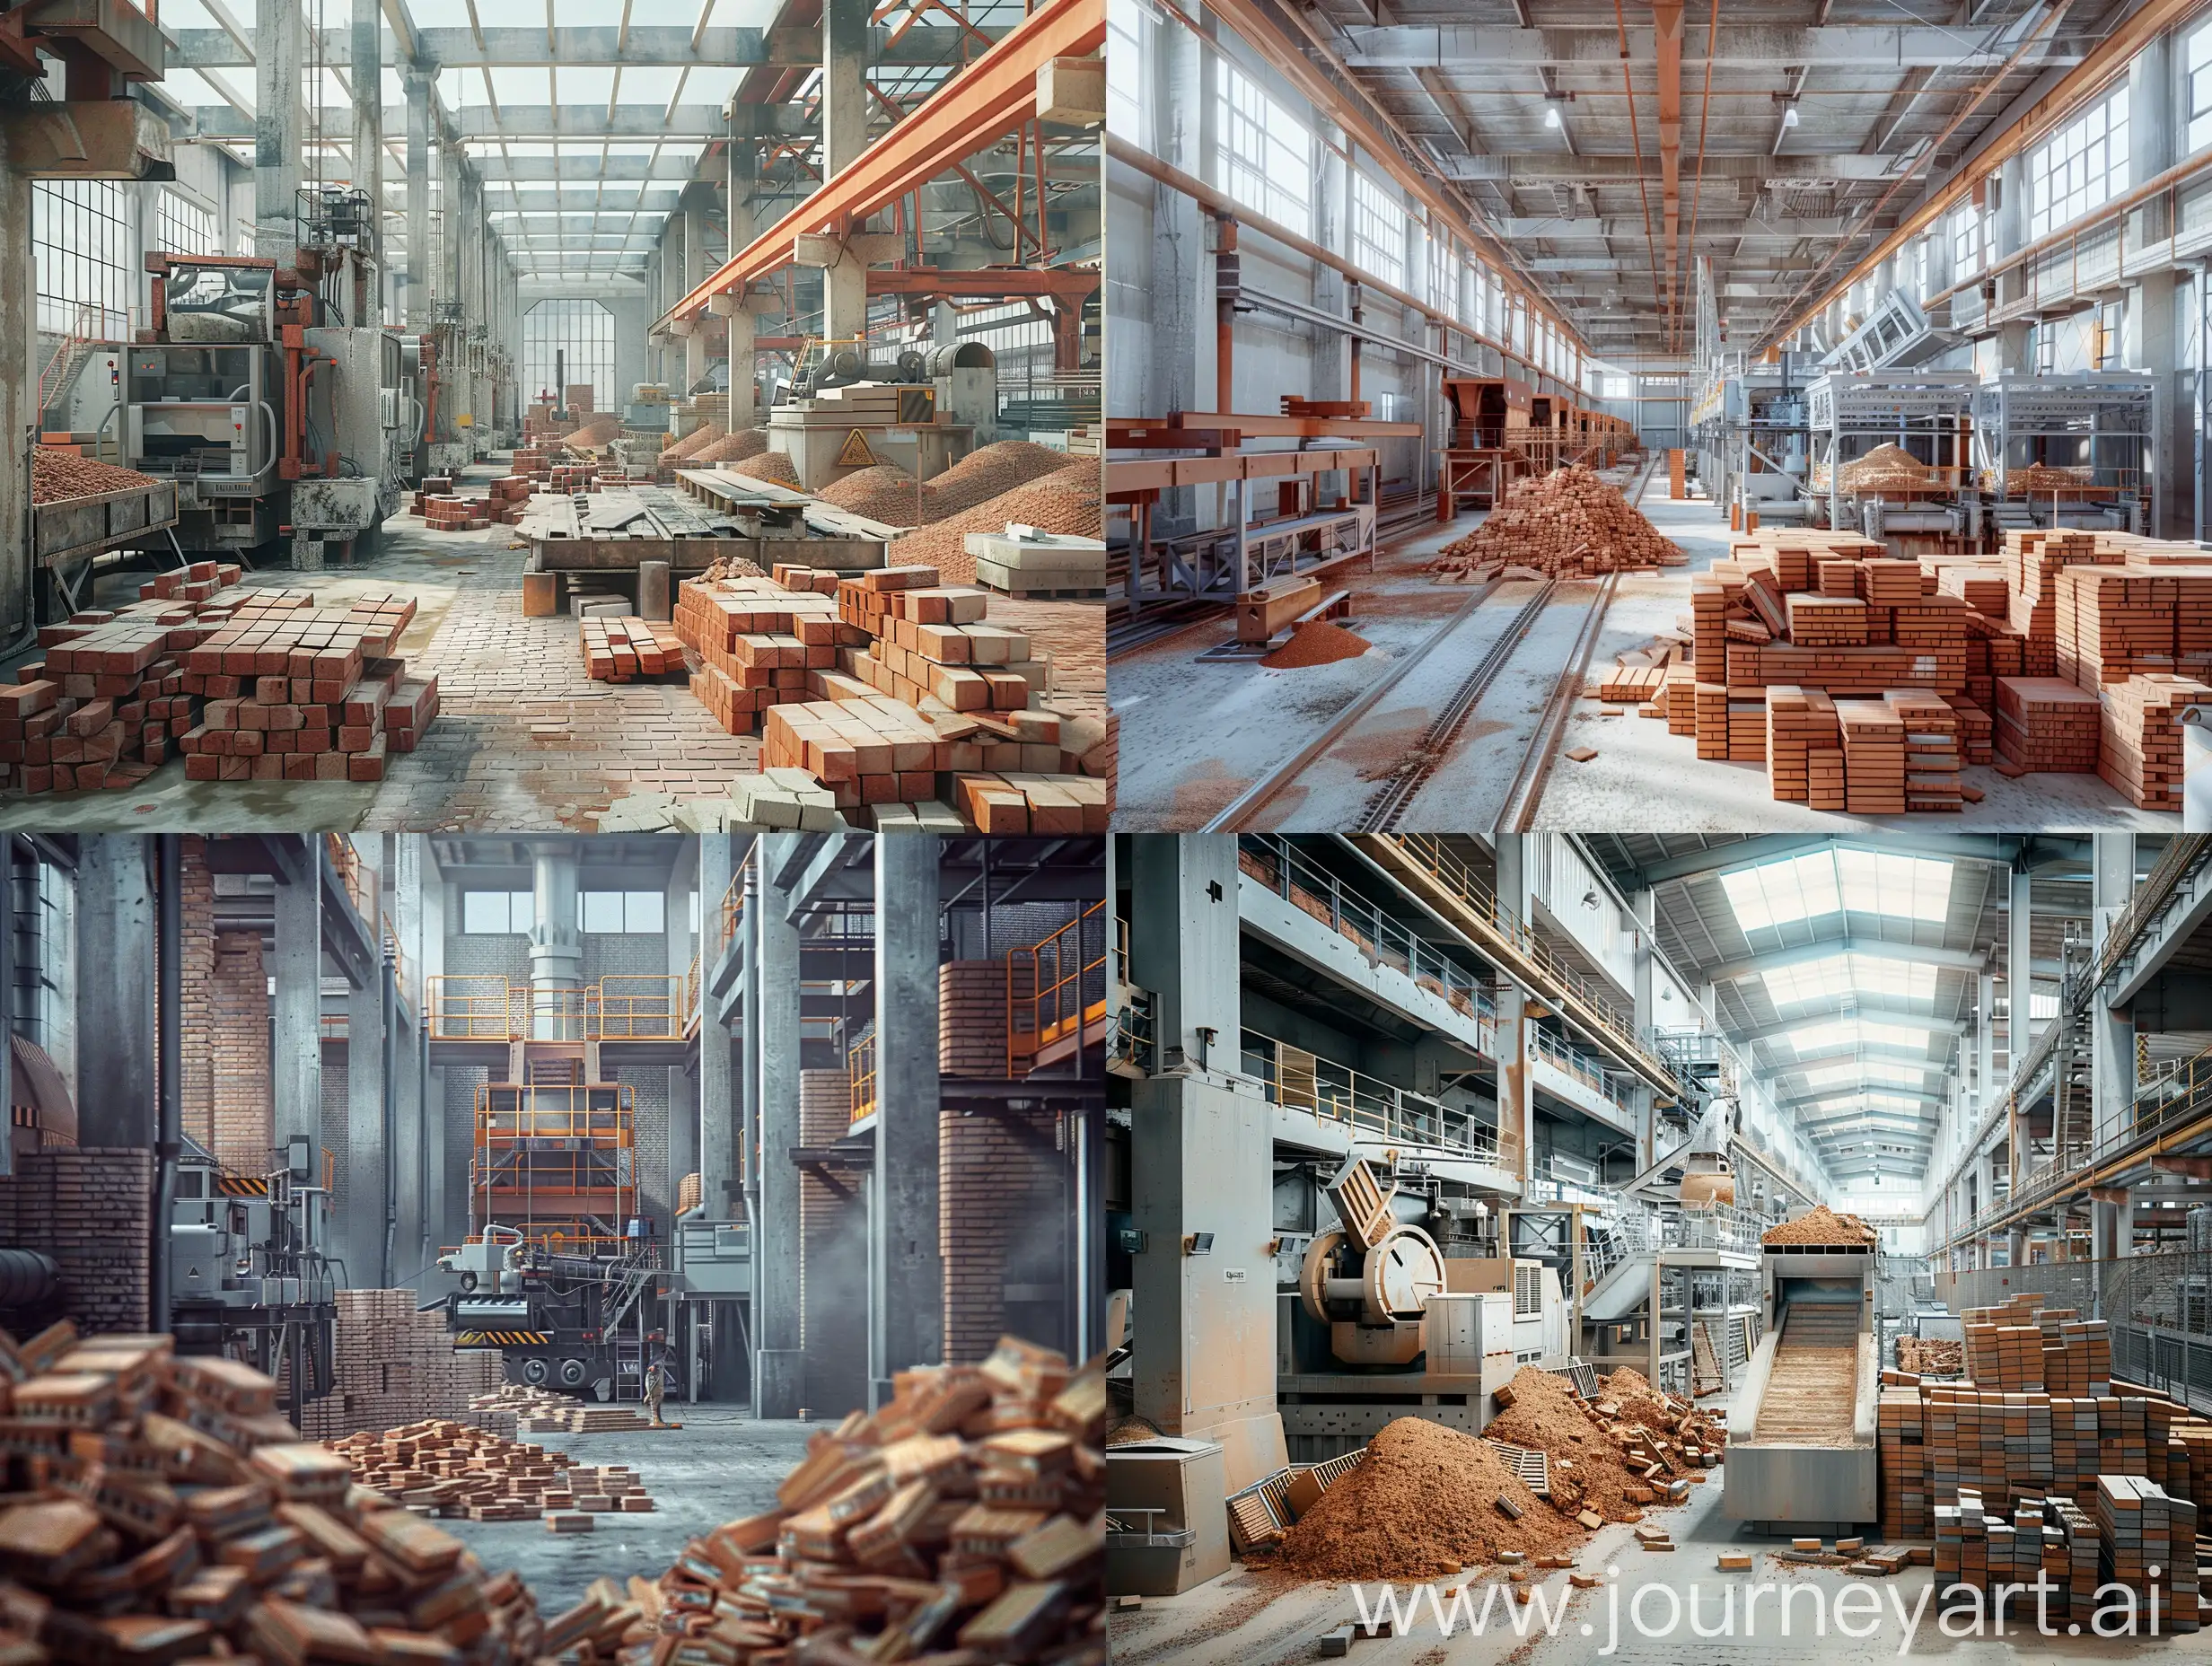 Modern-Brick-Factory-Interior-with-Machinery-and-Bricks